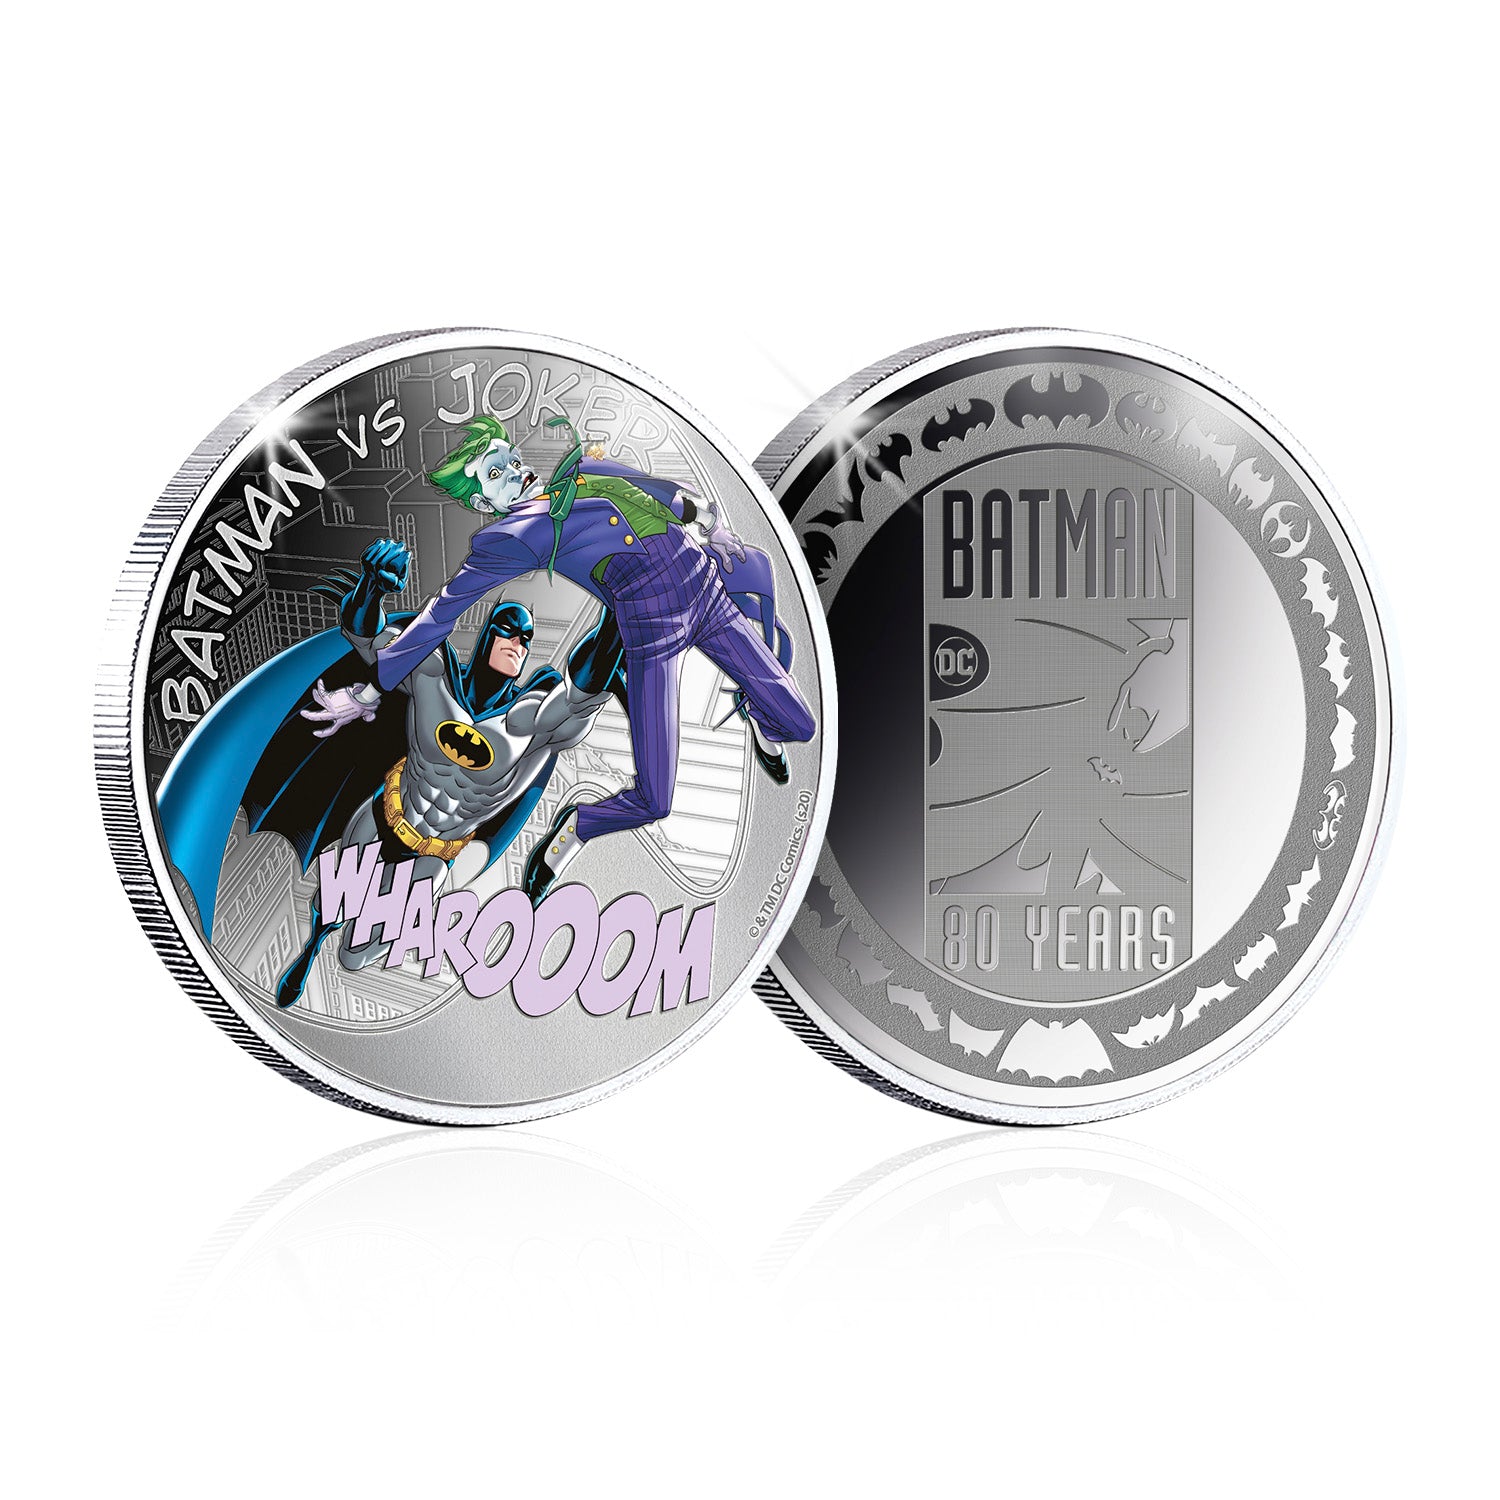 Batman vs Joker Silver Plated Commemorative